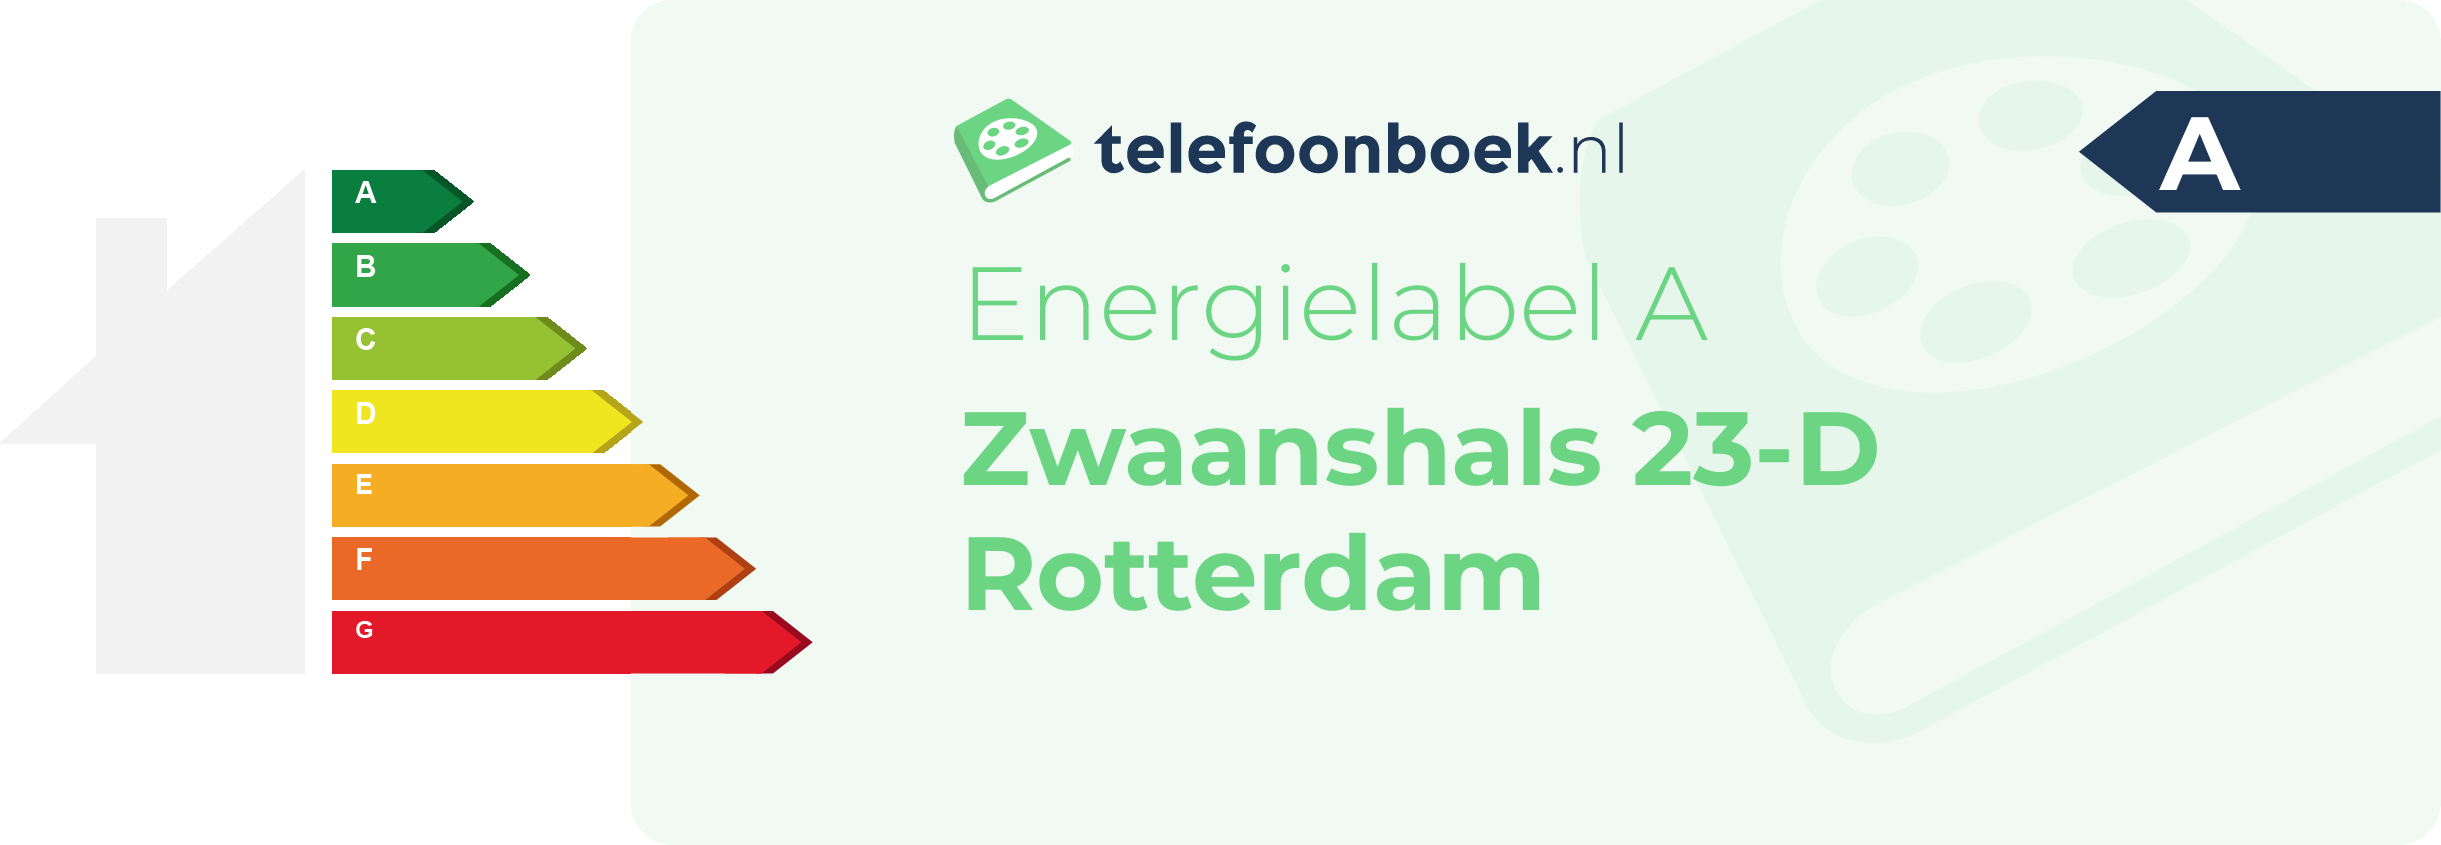 Energielabel Zwaanshals 23-D Rotterdam